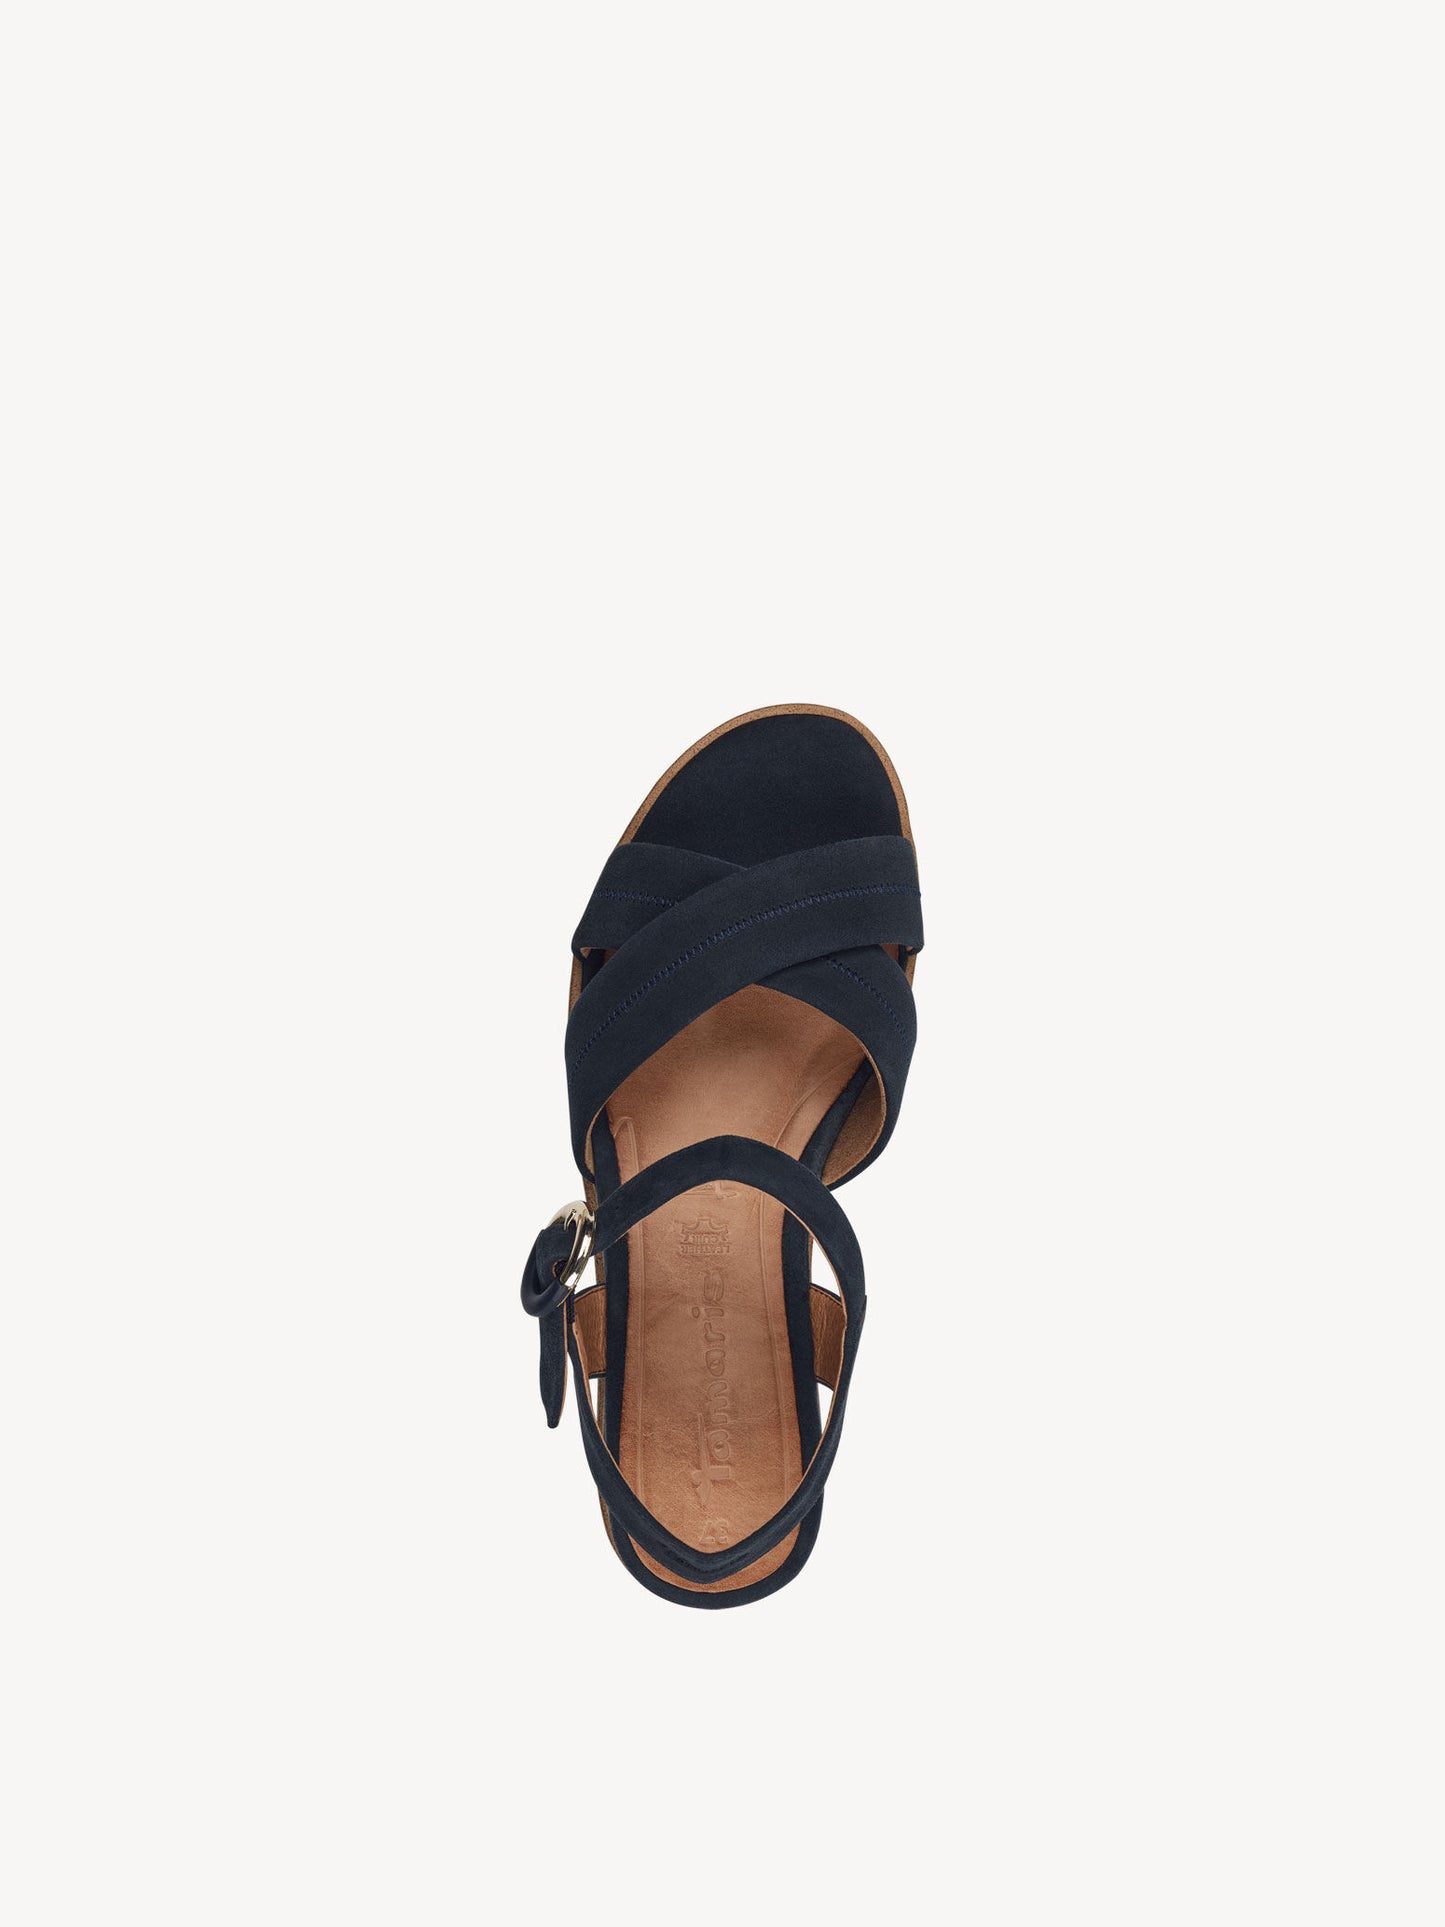 Tamaris Women's 1-28202-42 Heeled Leather Sandals Navy Blue